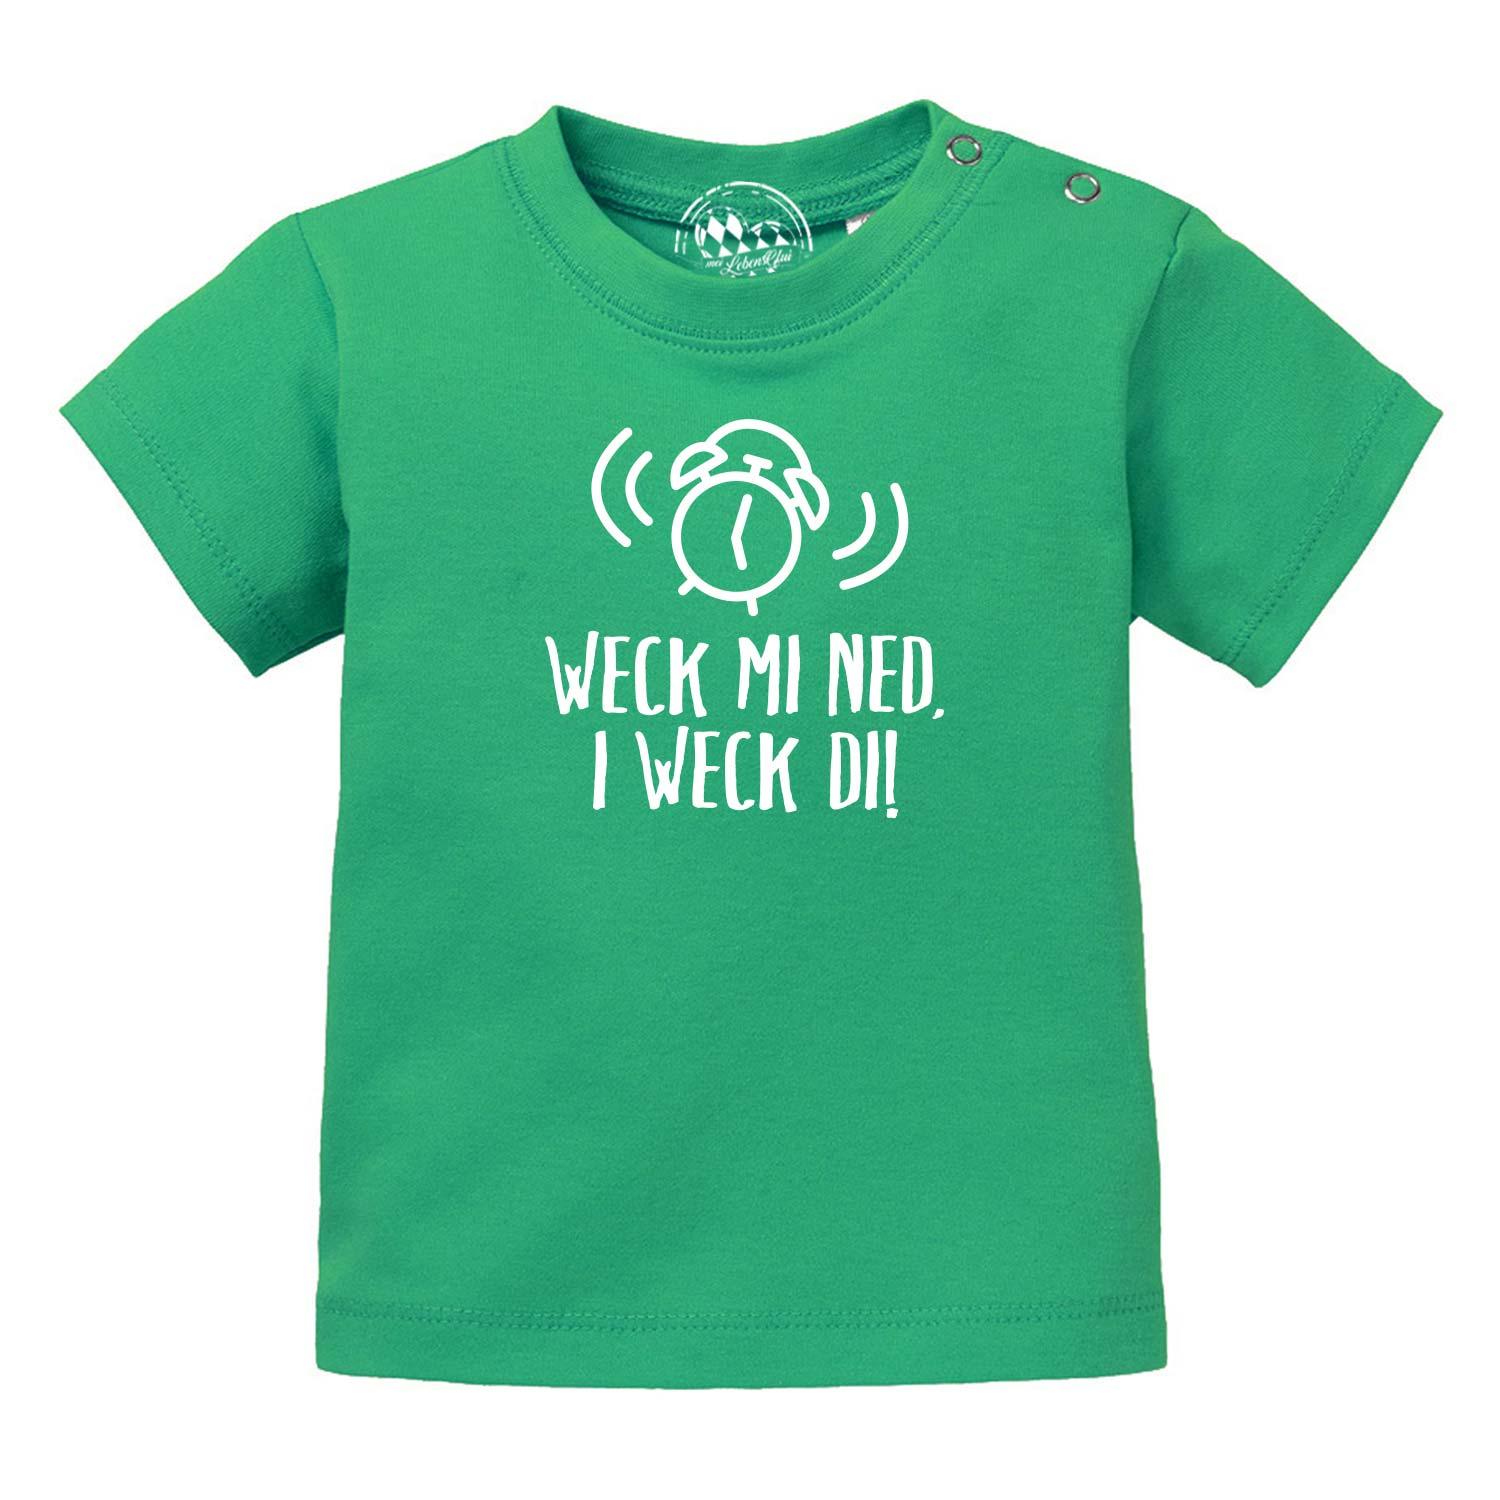 Baby T-Shirt "I weck di!" - bavariashop - mei LebensGfui